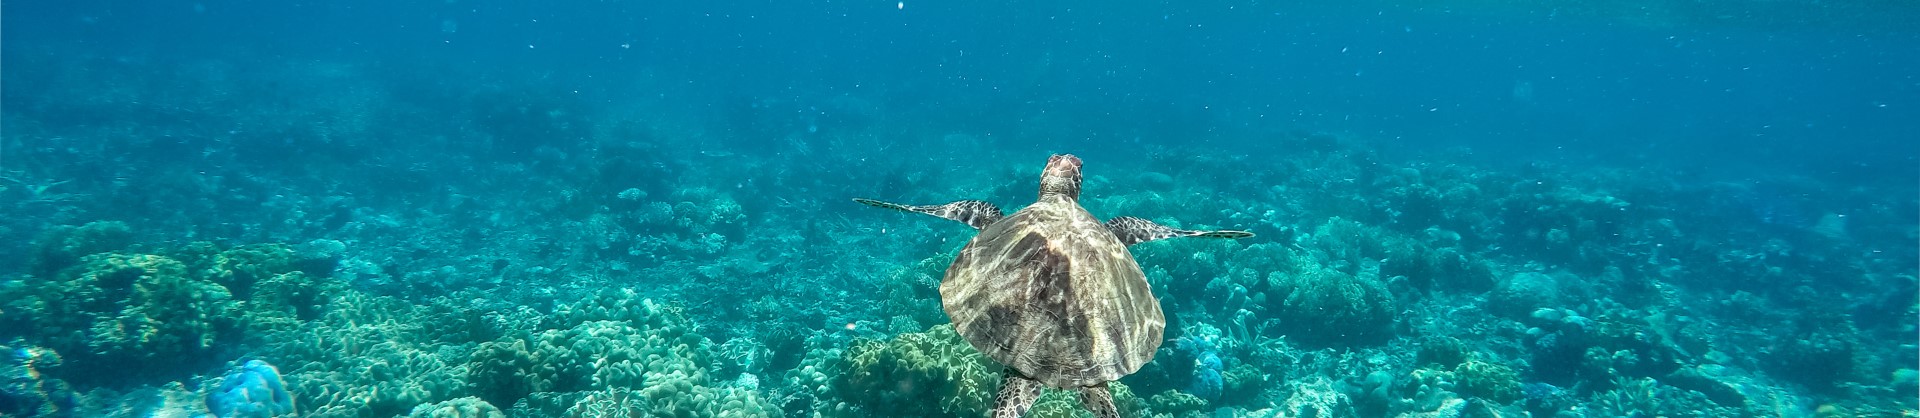 Swim in the Sky-blue Ocean with Turtles